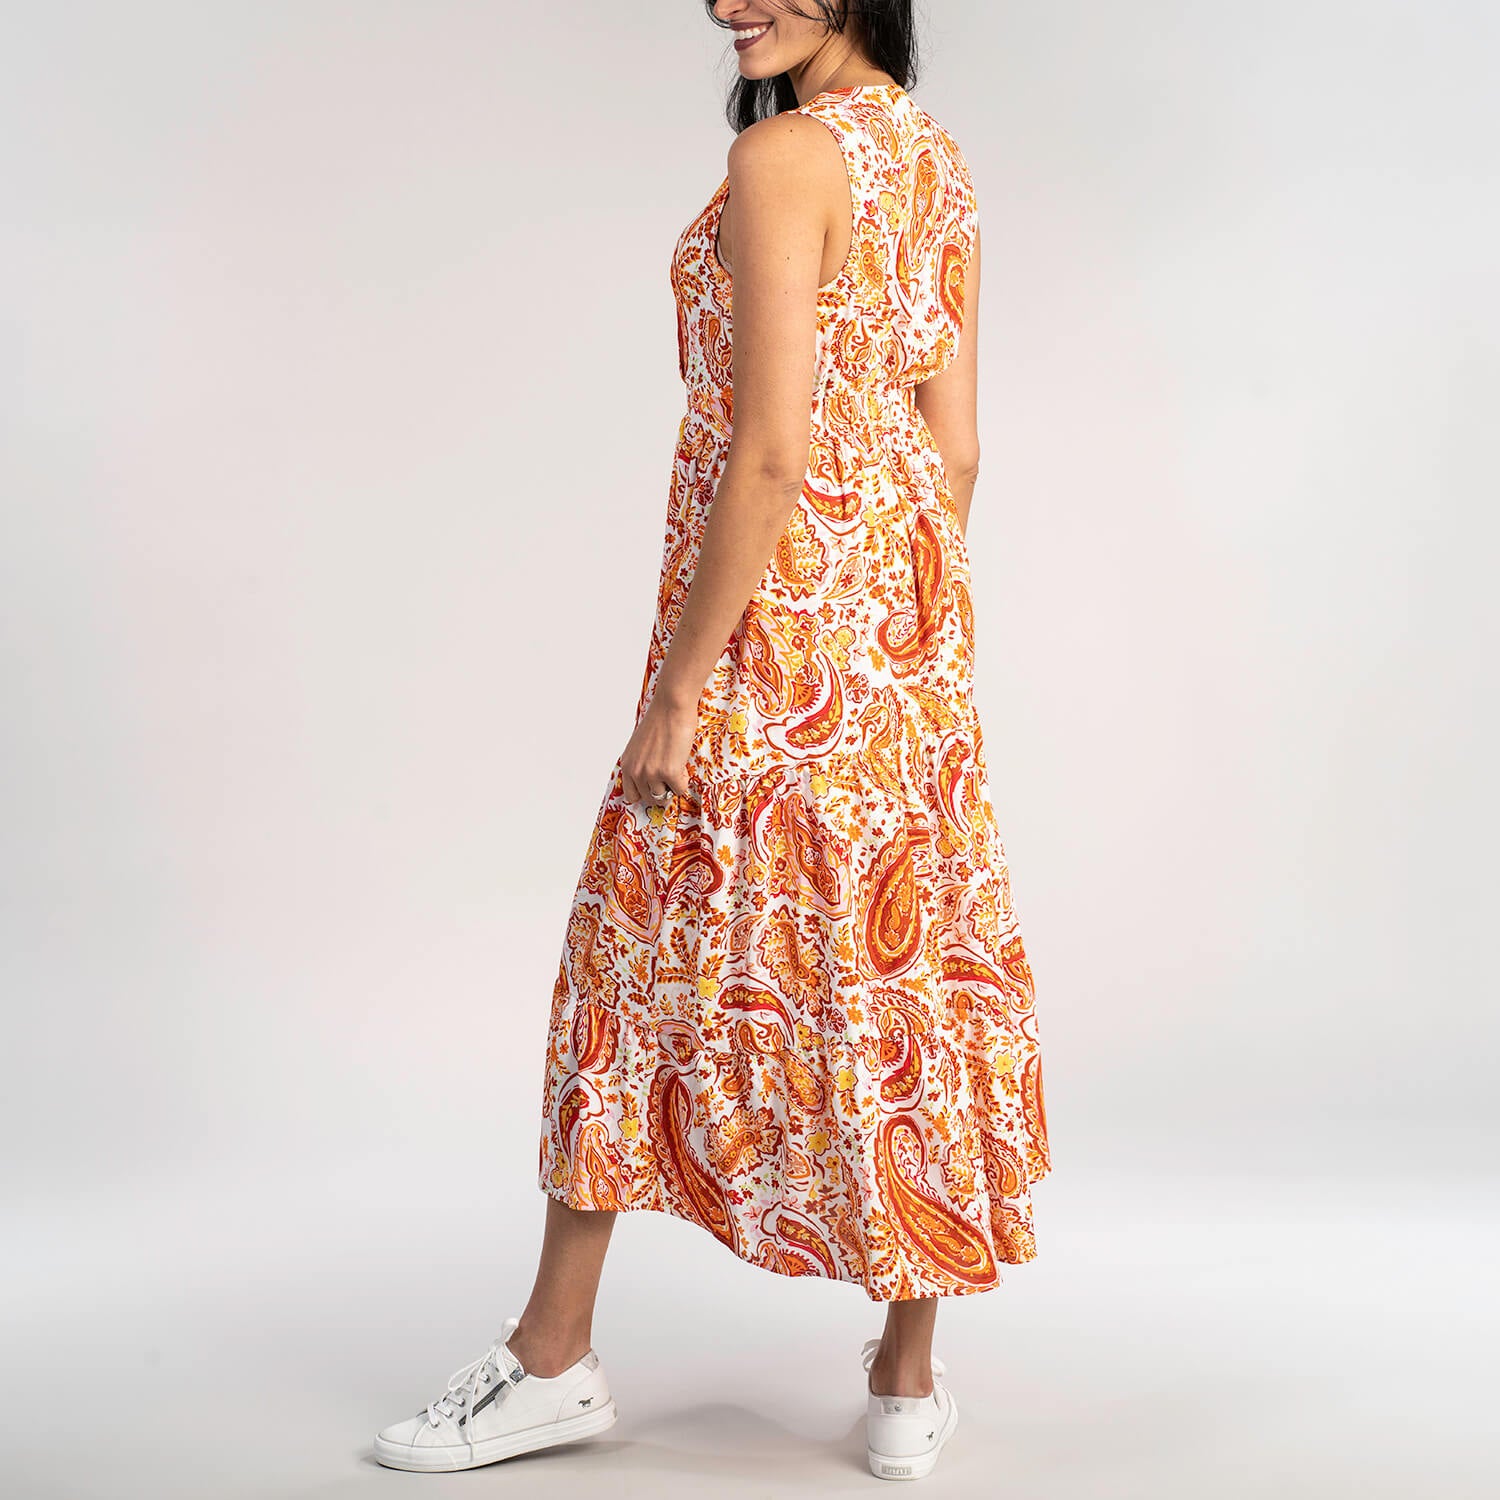 Naoise V Neck Sleeveless Dress - Coral 4 Shaws Department Stores